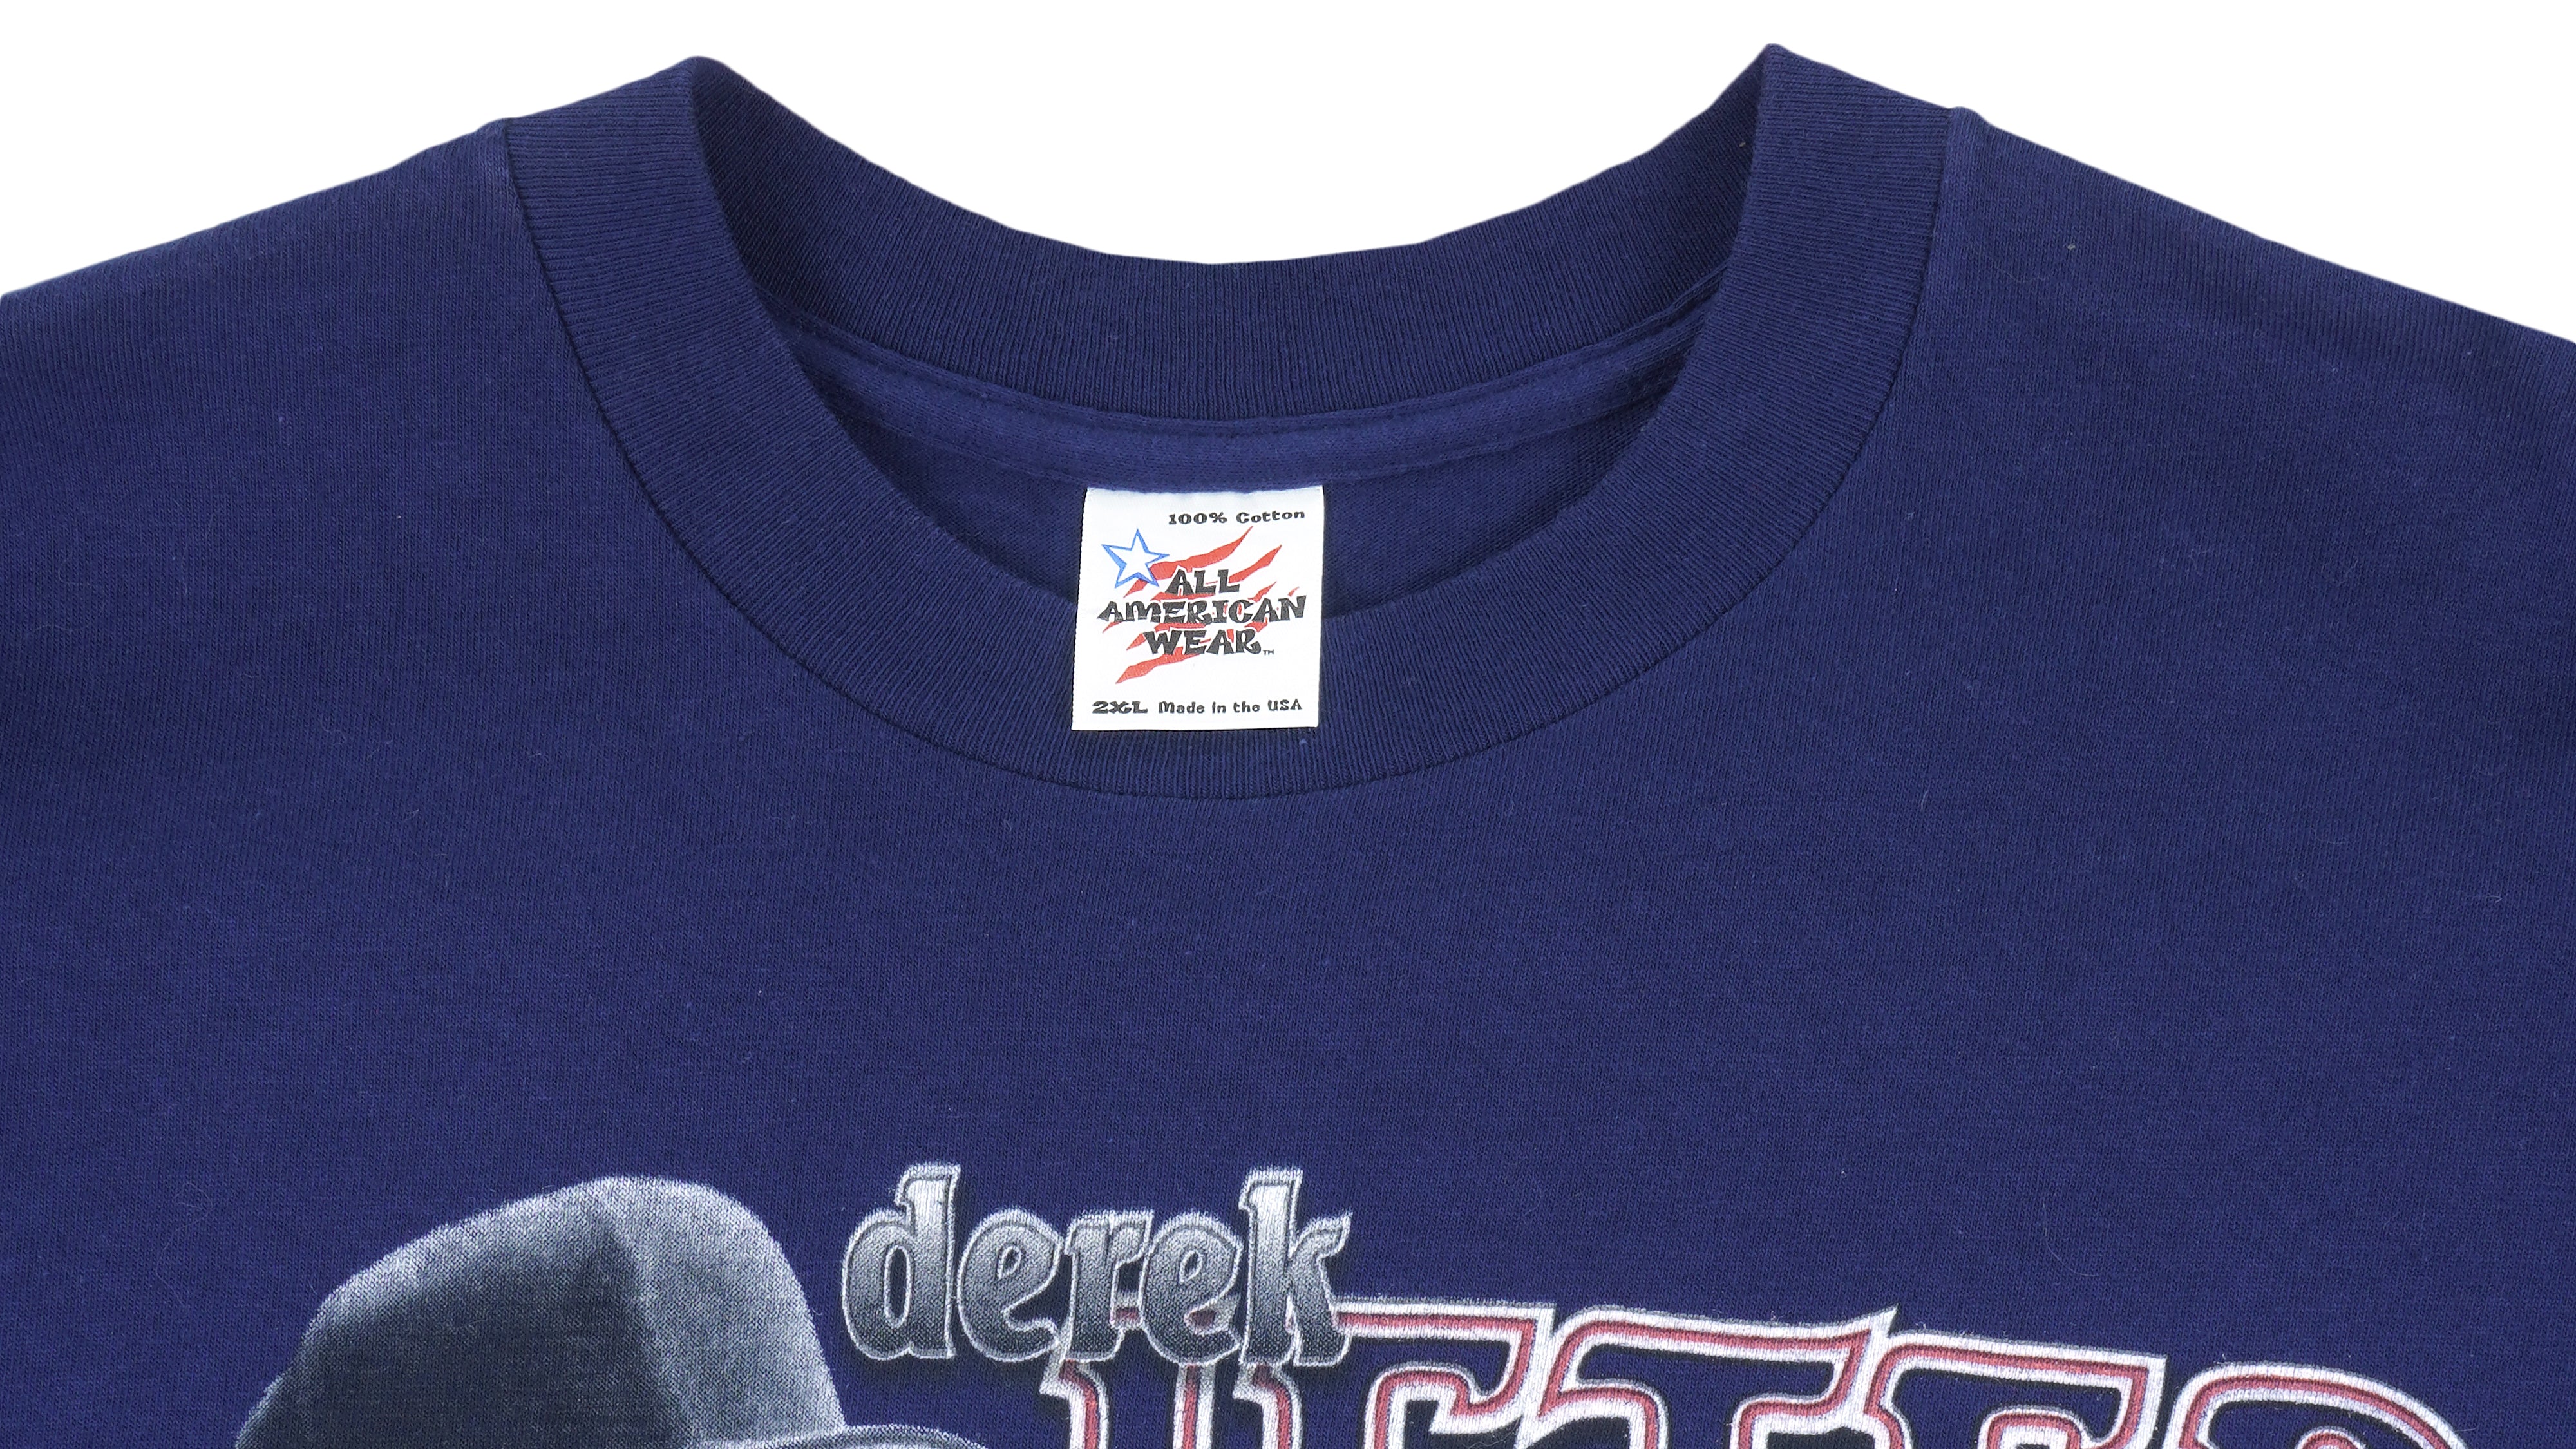 Derek Jeter 2 New York Yankees baseball player Vintage shirt